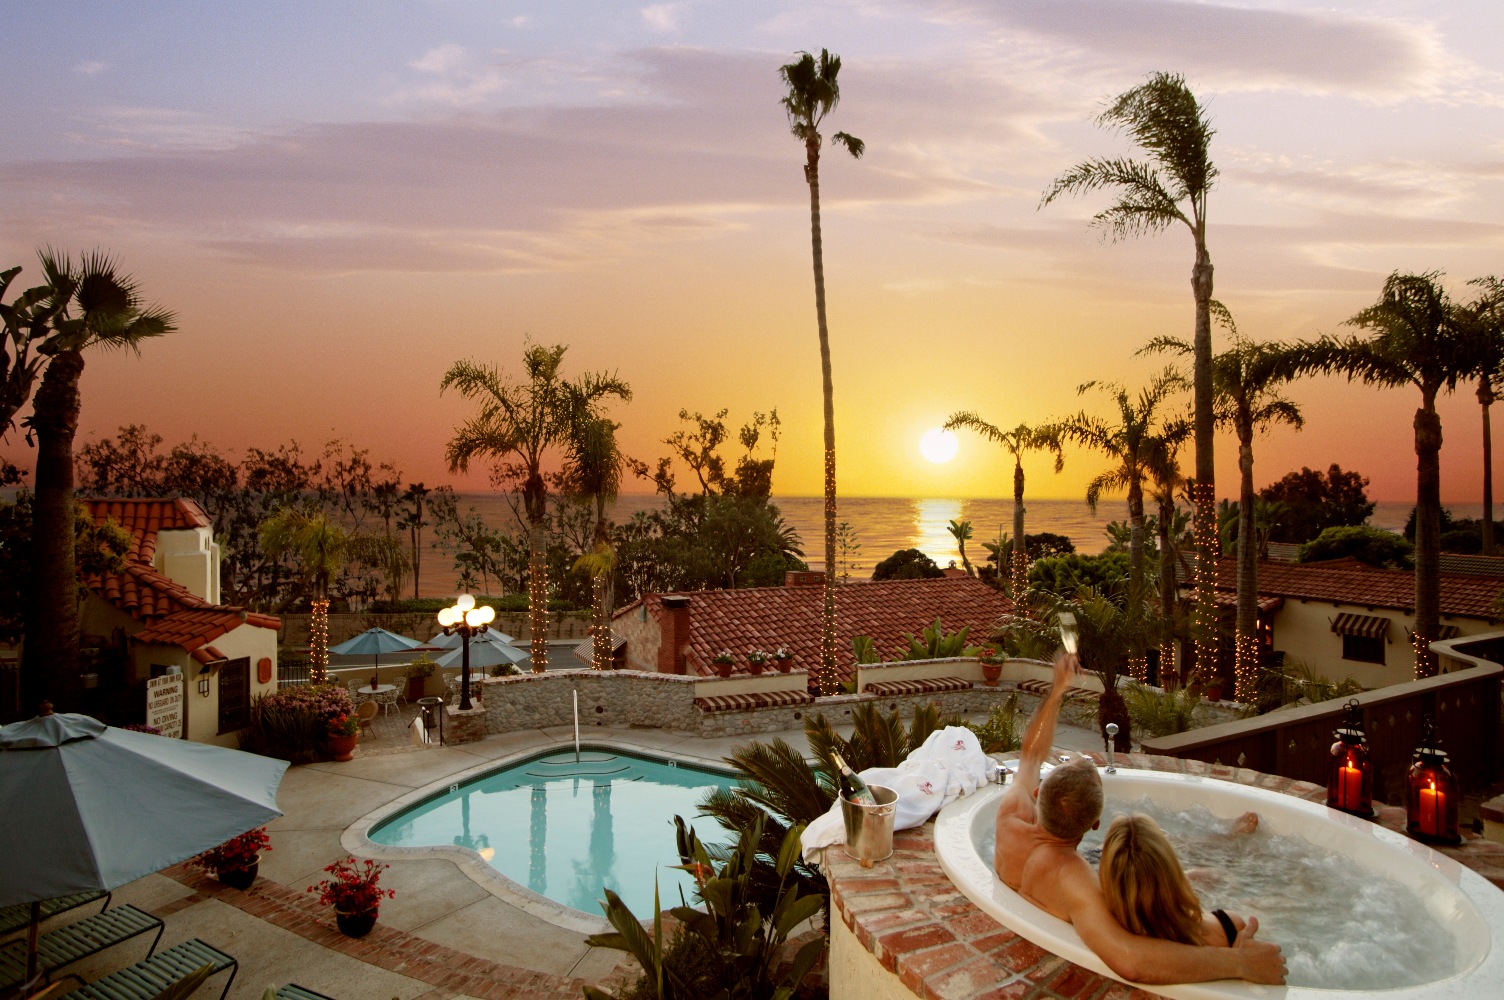 laguna casa inn hotels spa california vacation hotel never want sunset pr around nicole goes orange county prestigious awarded eco